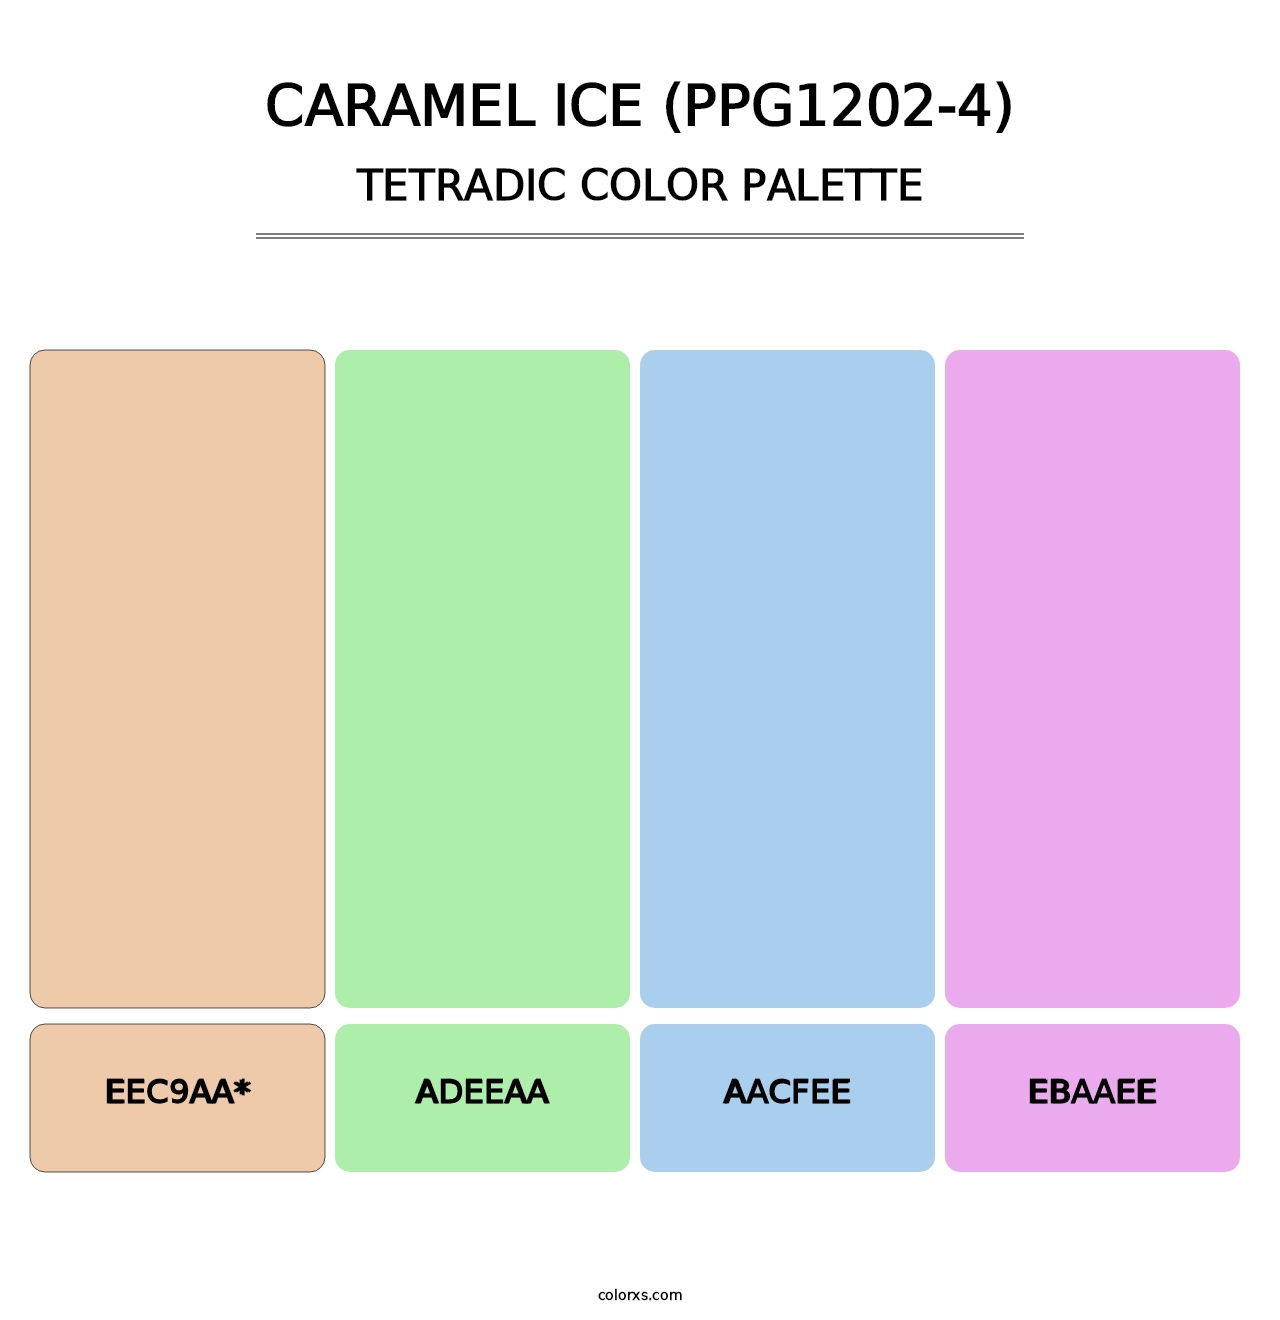 Caramel Ice (PPG1202-4) - Tetradic Color Palette